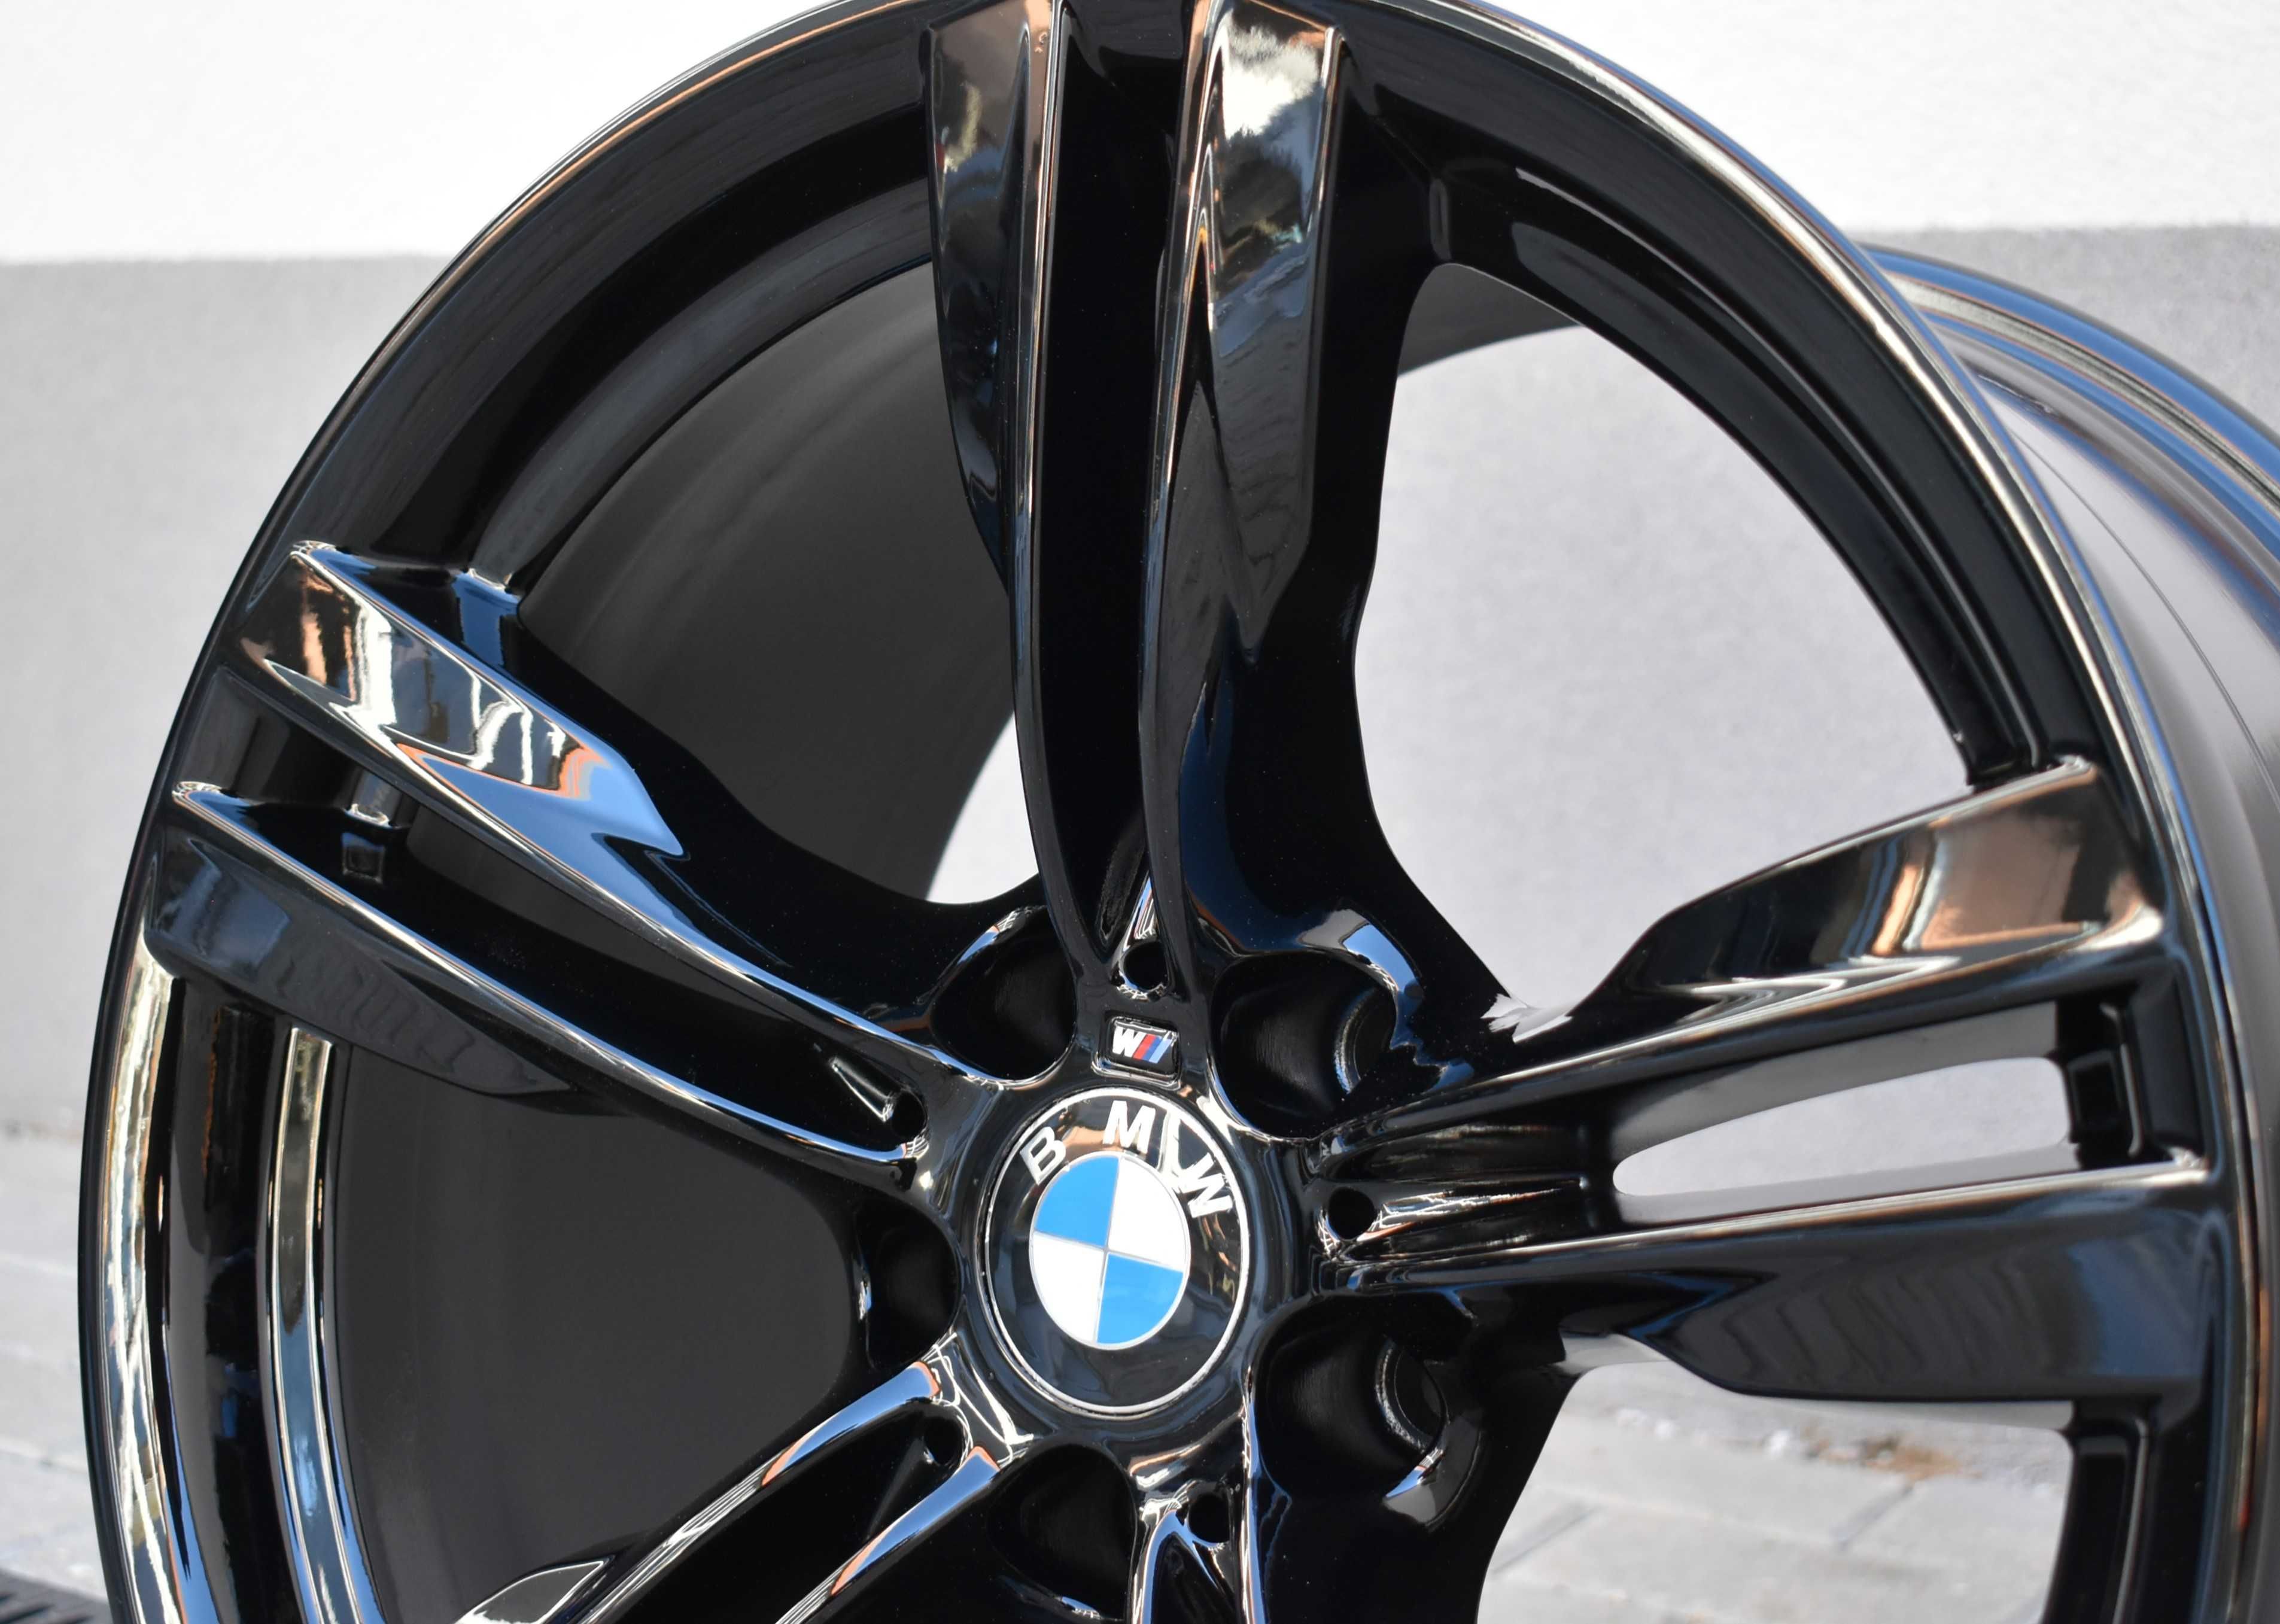 19'' Джанти BMW X5 F15 467 M Double-Spoke black